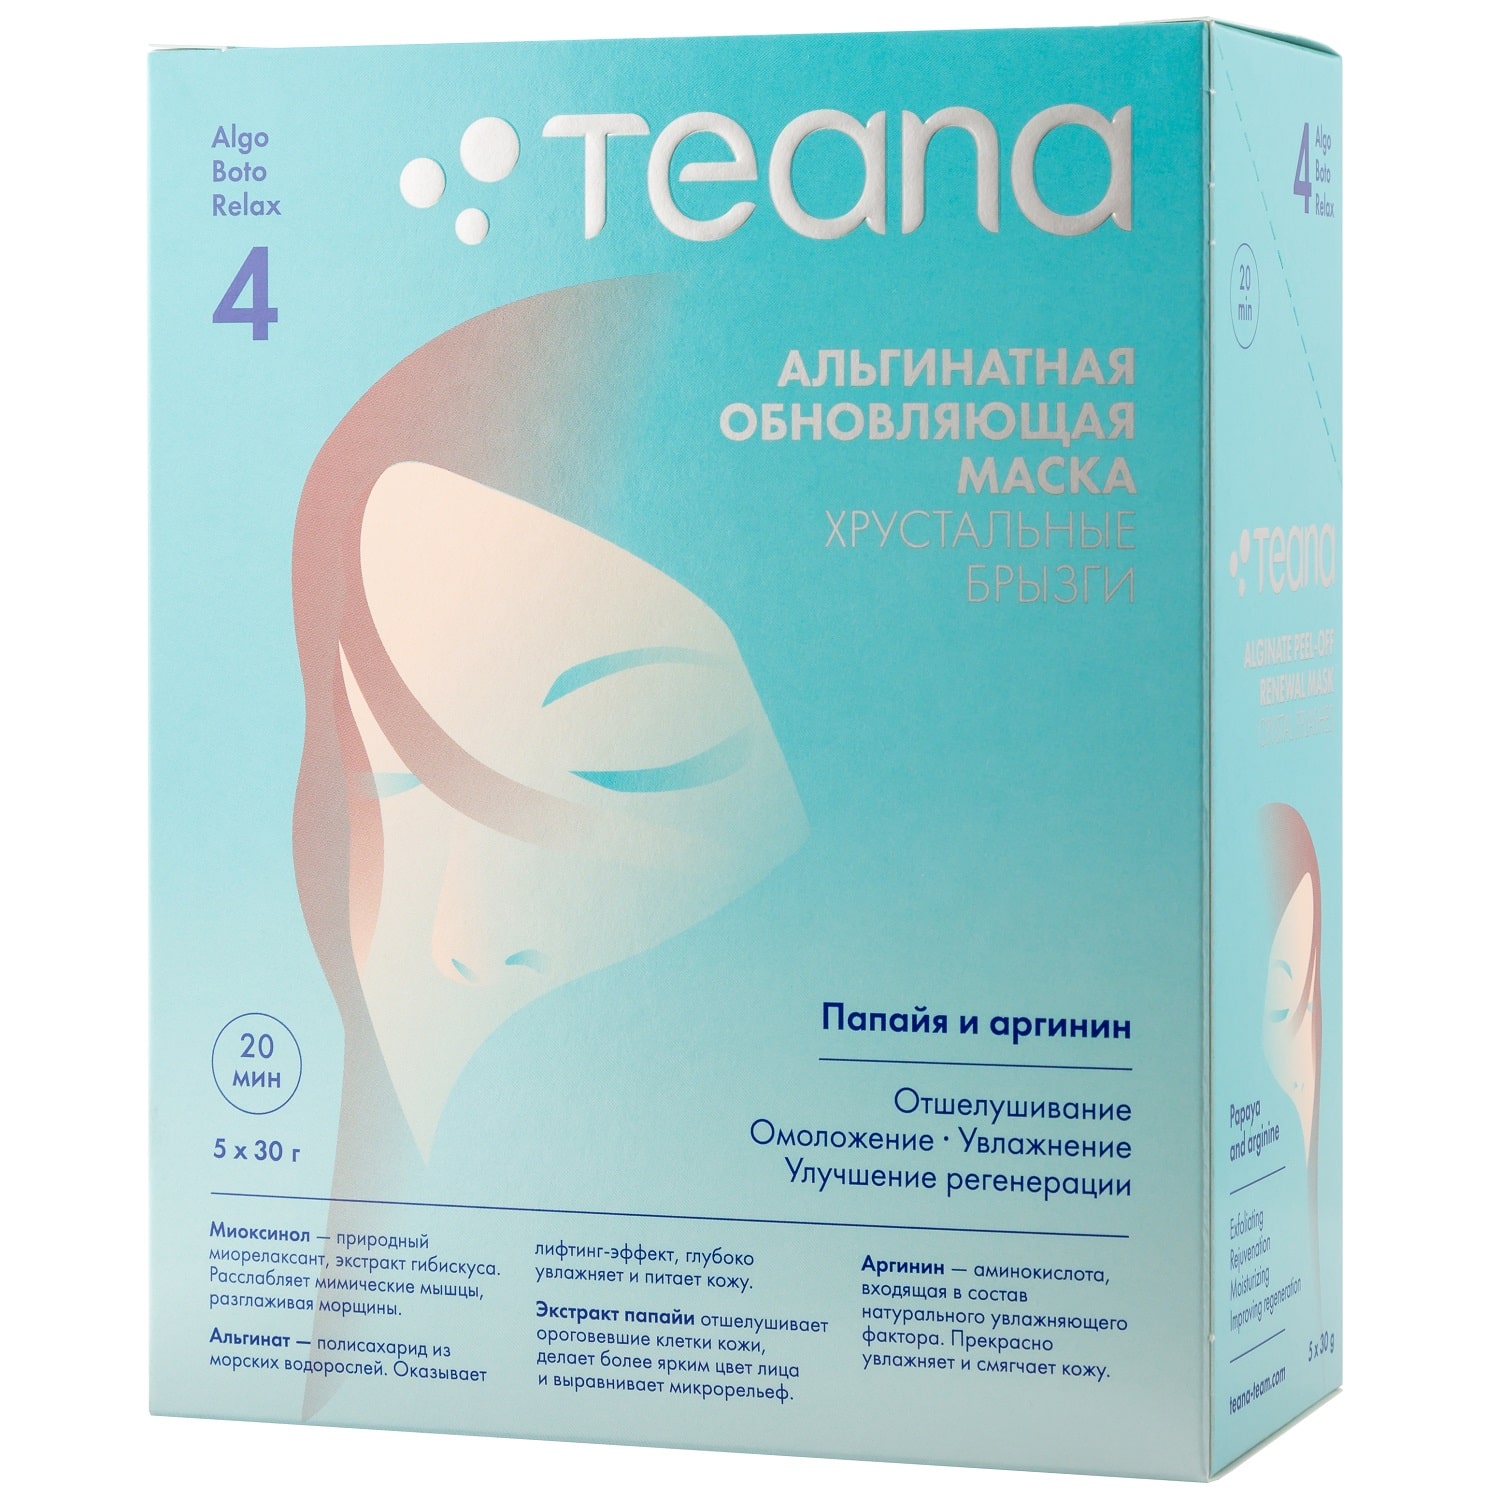 Teana Альгинатная Очищающая маска «Хрустальный веер брызг» 30х5 гр (Teana, AlgoBotoRelax)